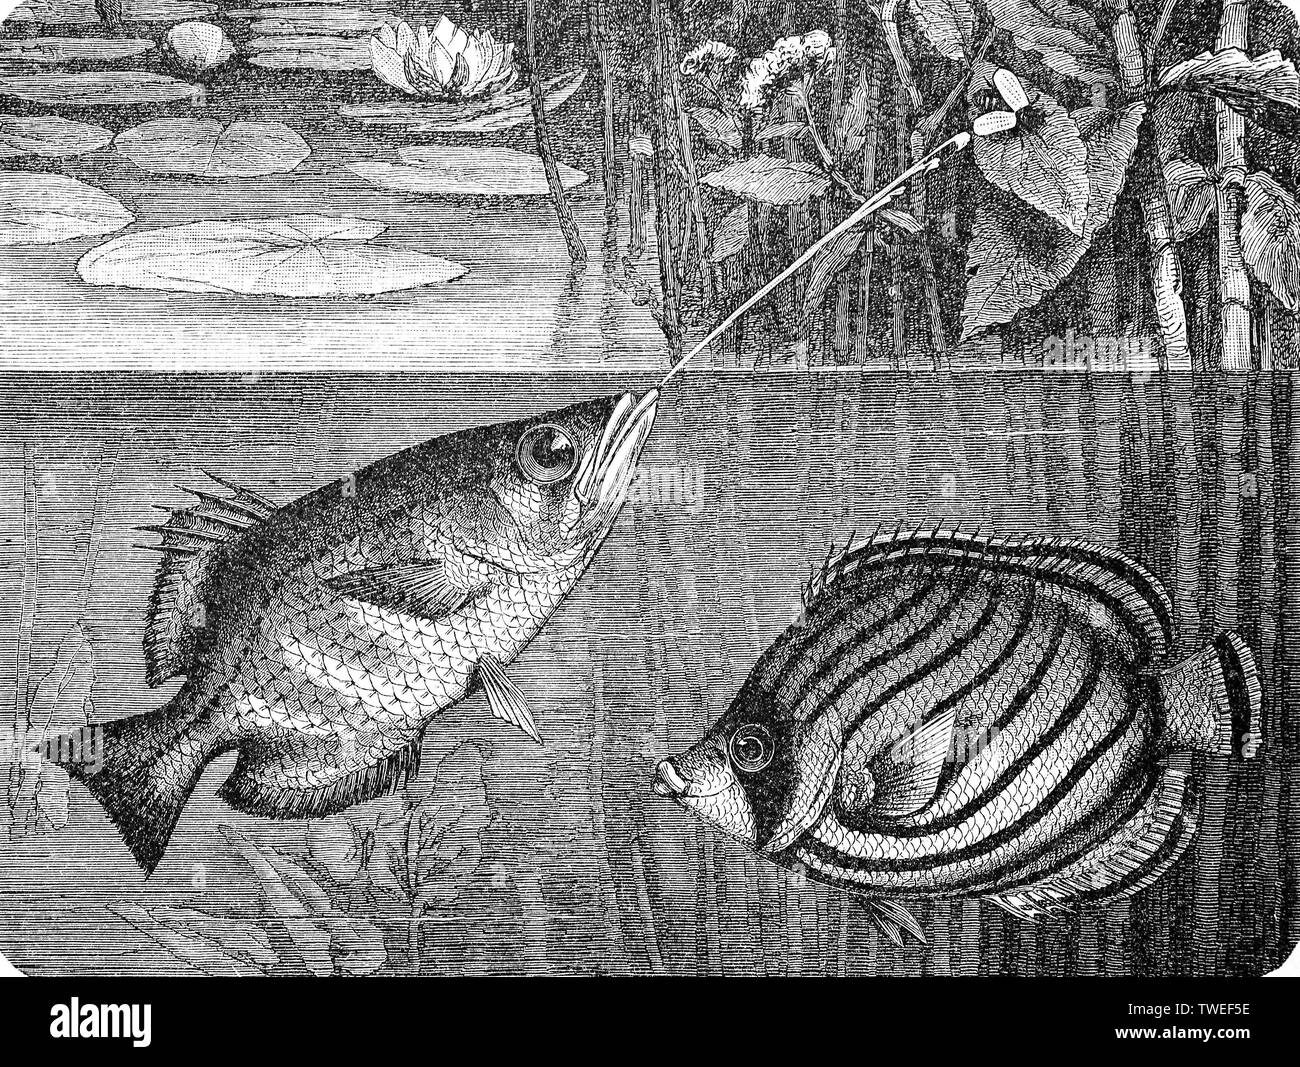 Banded archerfish and Scrawled Butterflyfish, (Toxotes jaculator, Chaetodon meyeri), 1881, historical woodcut illustration, Germany Stock Photo